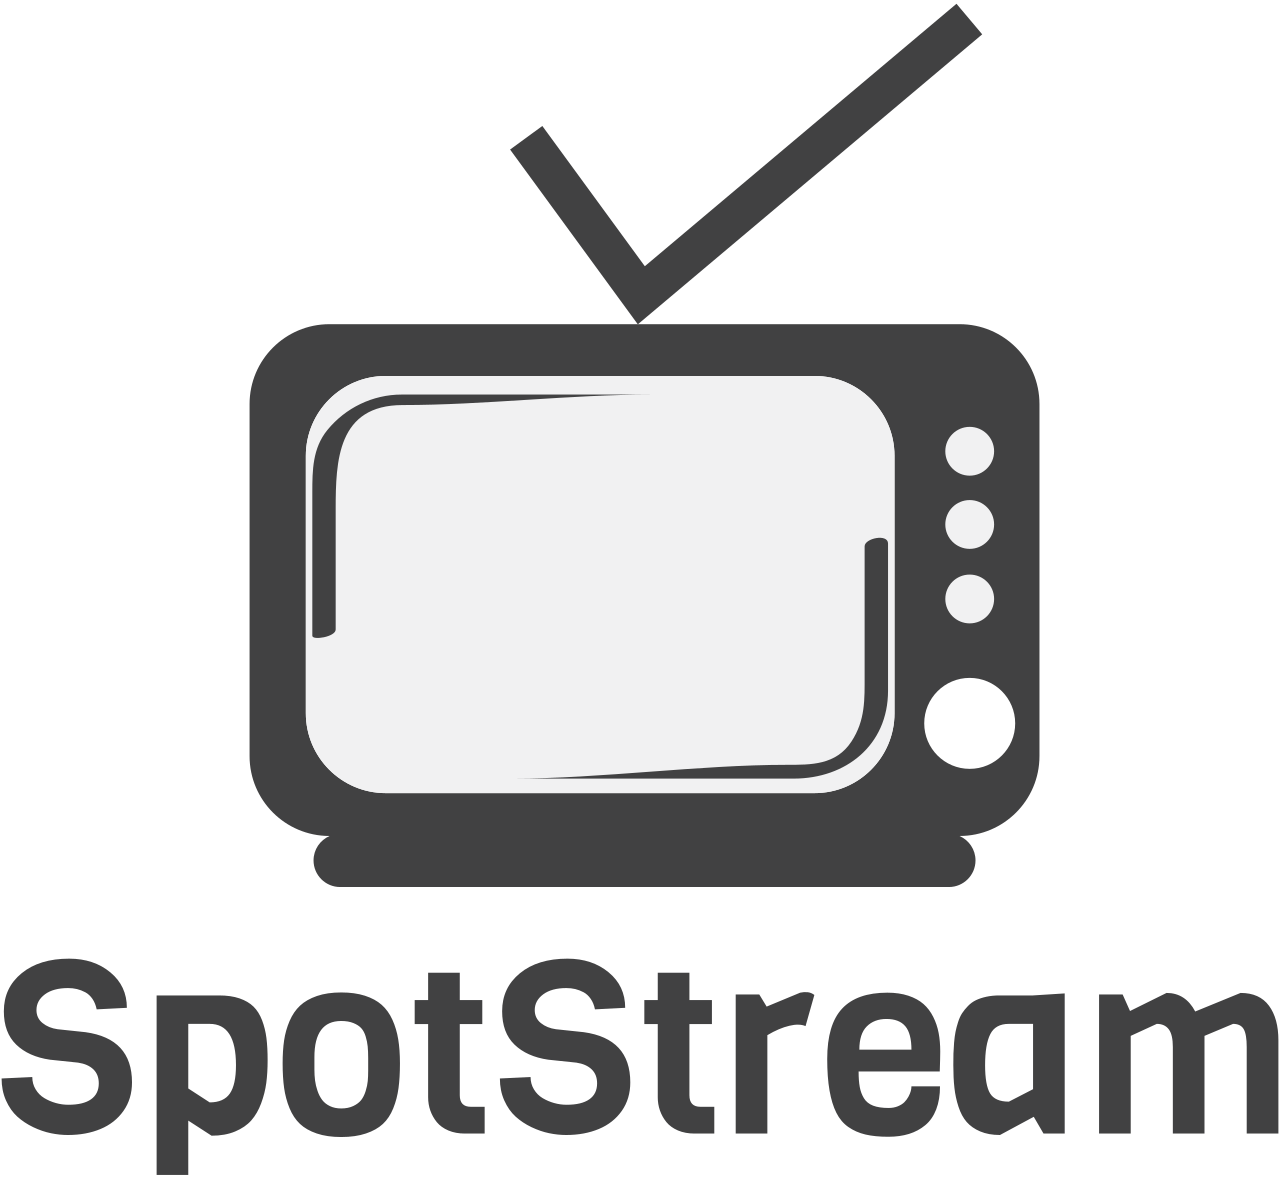 SpotStream